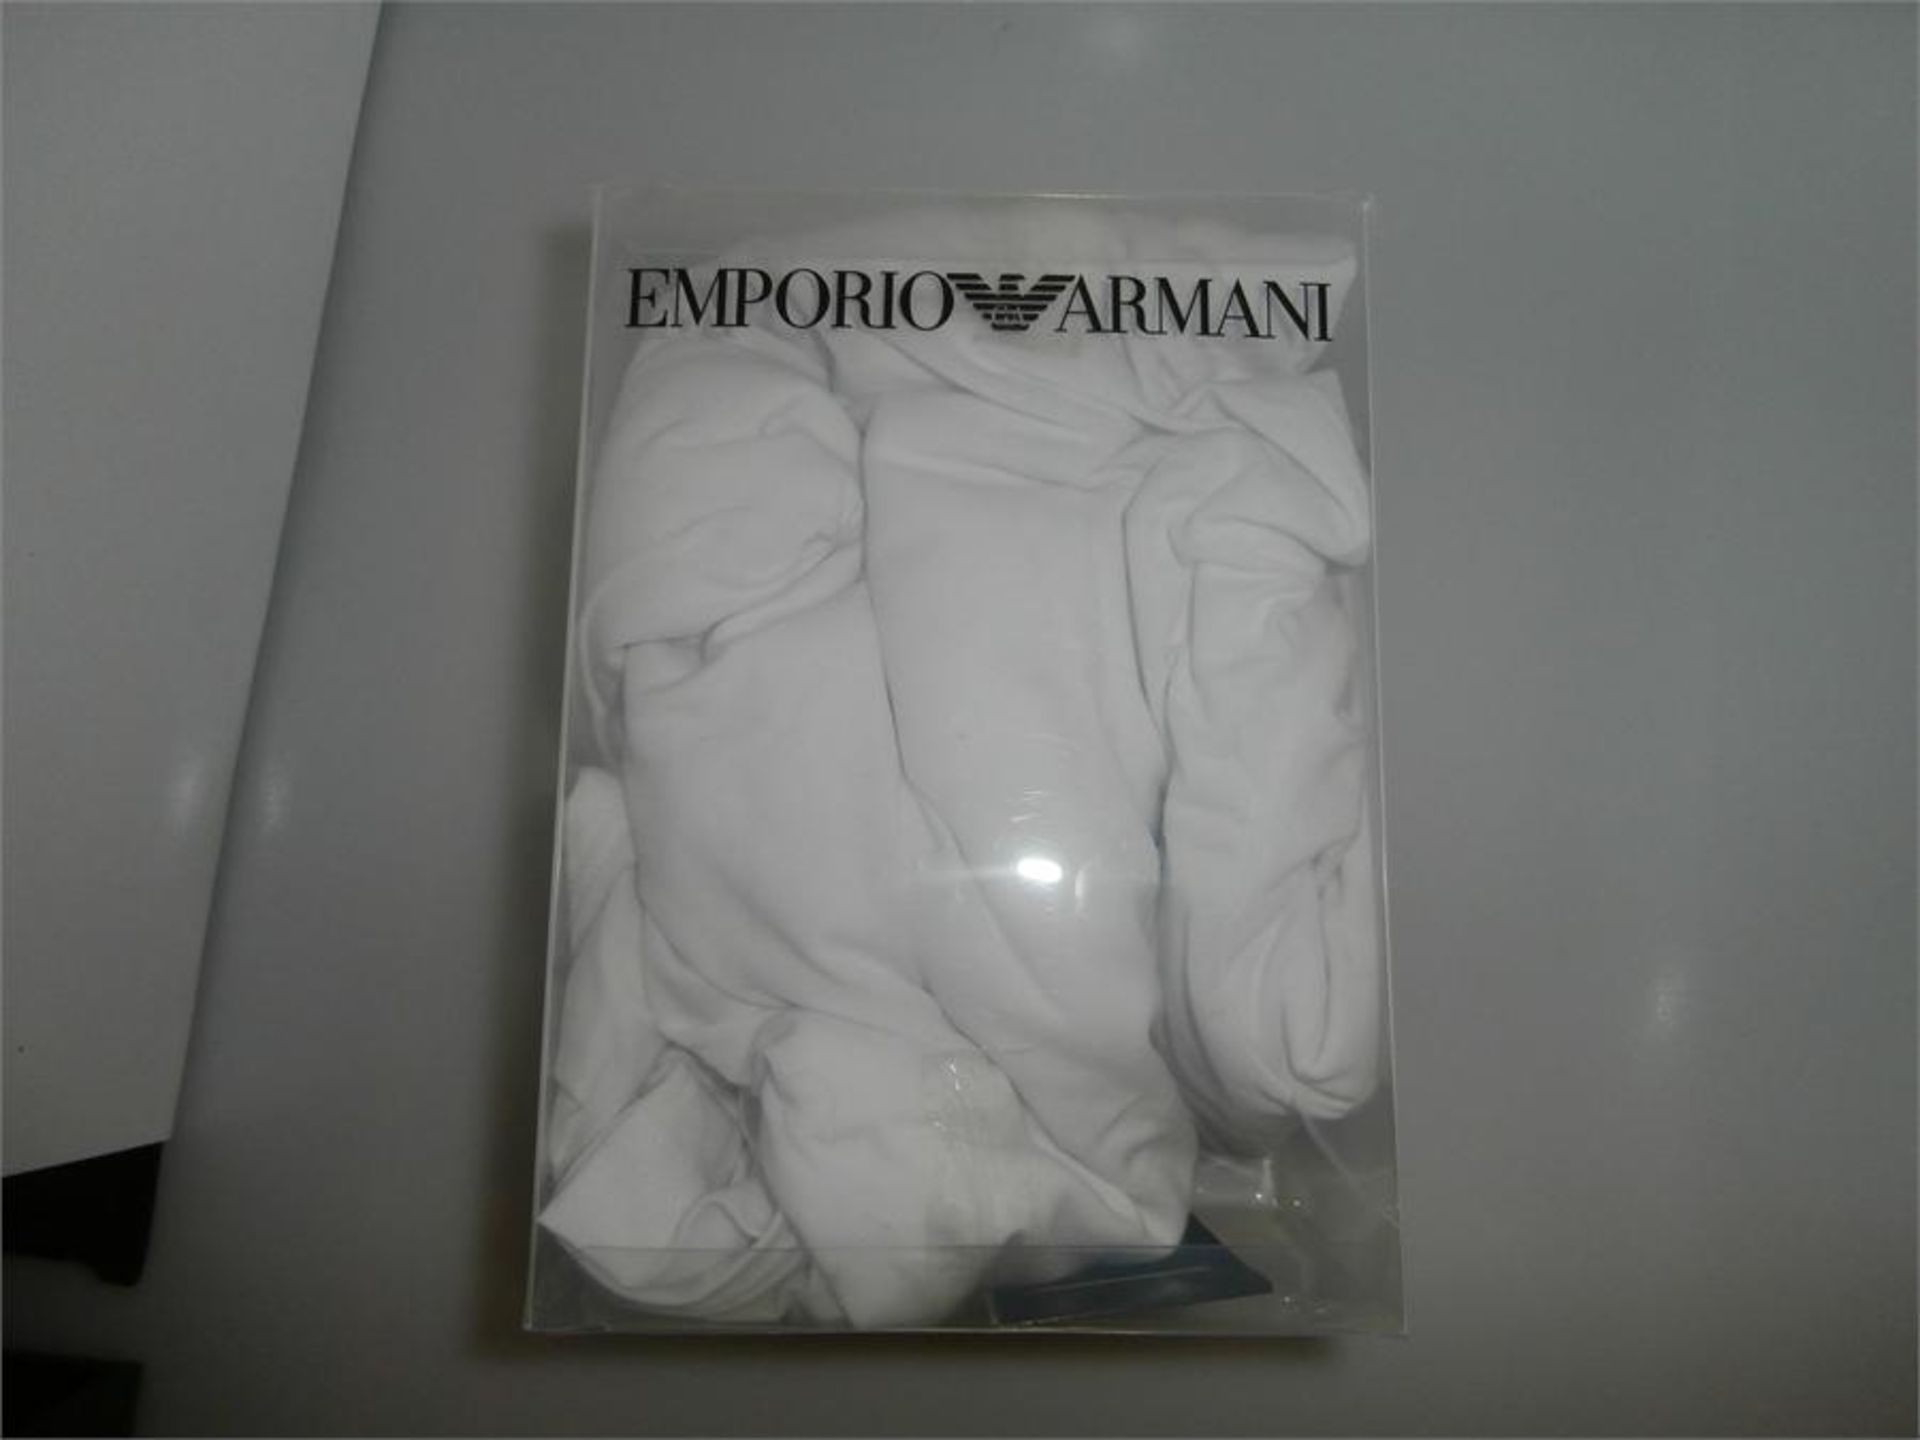 NEW. Emporio Armani, White, 100% Cotton, Crew Neck, Short Sleeve, T-SHIRT. 3pk. Regular Fit, Size M.